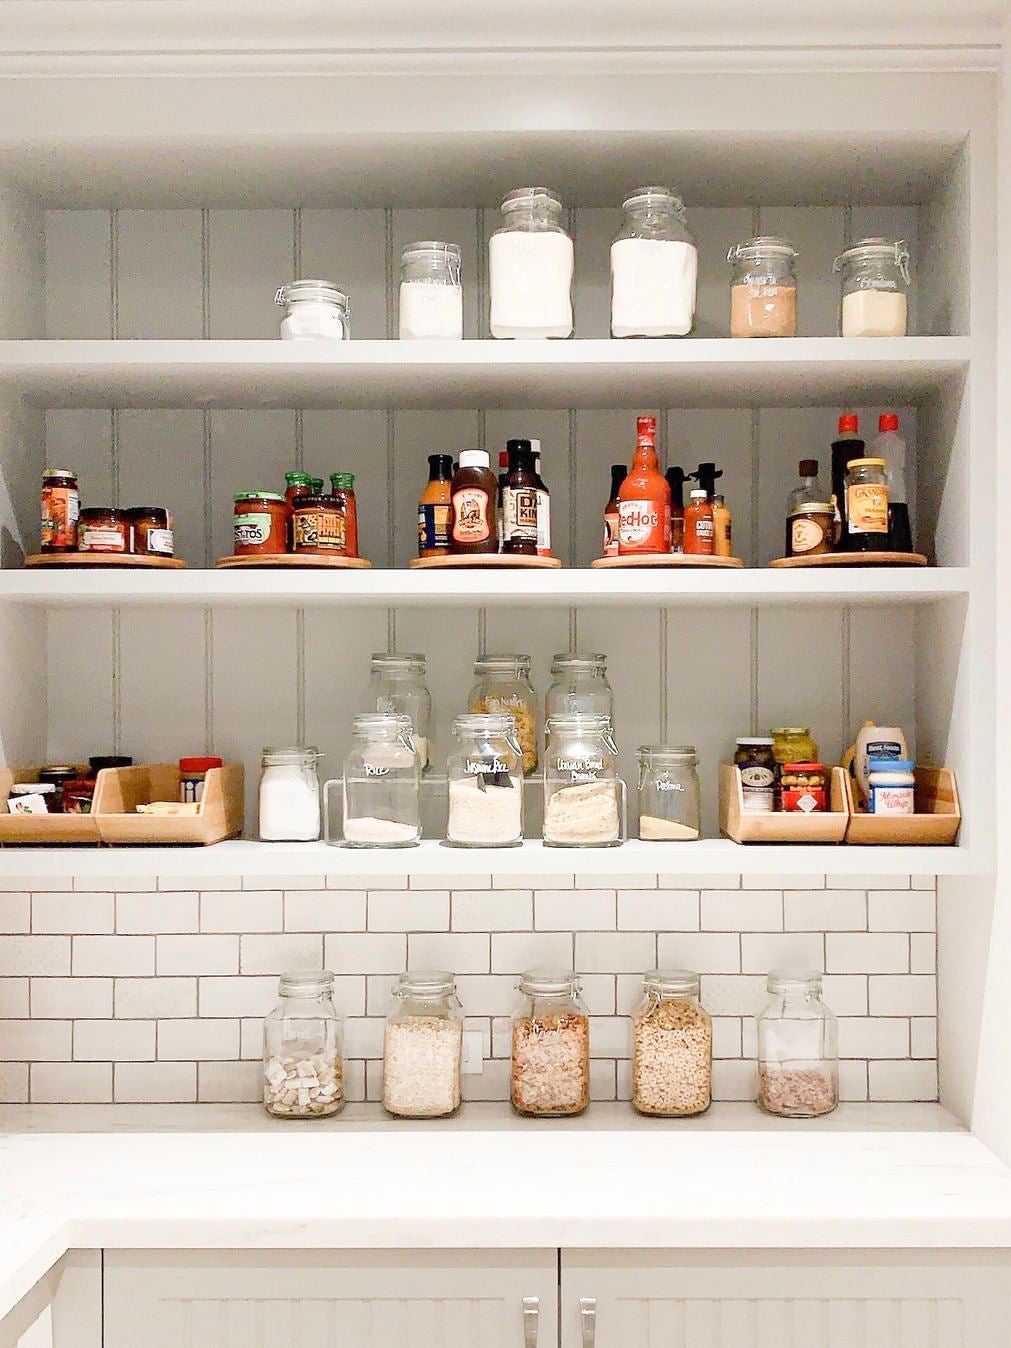 Neatly organized kitchen shelves